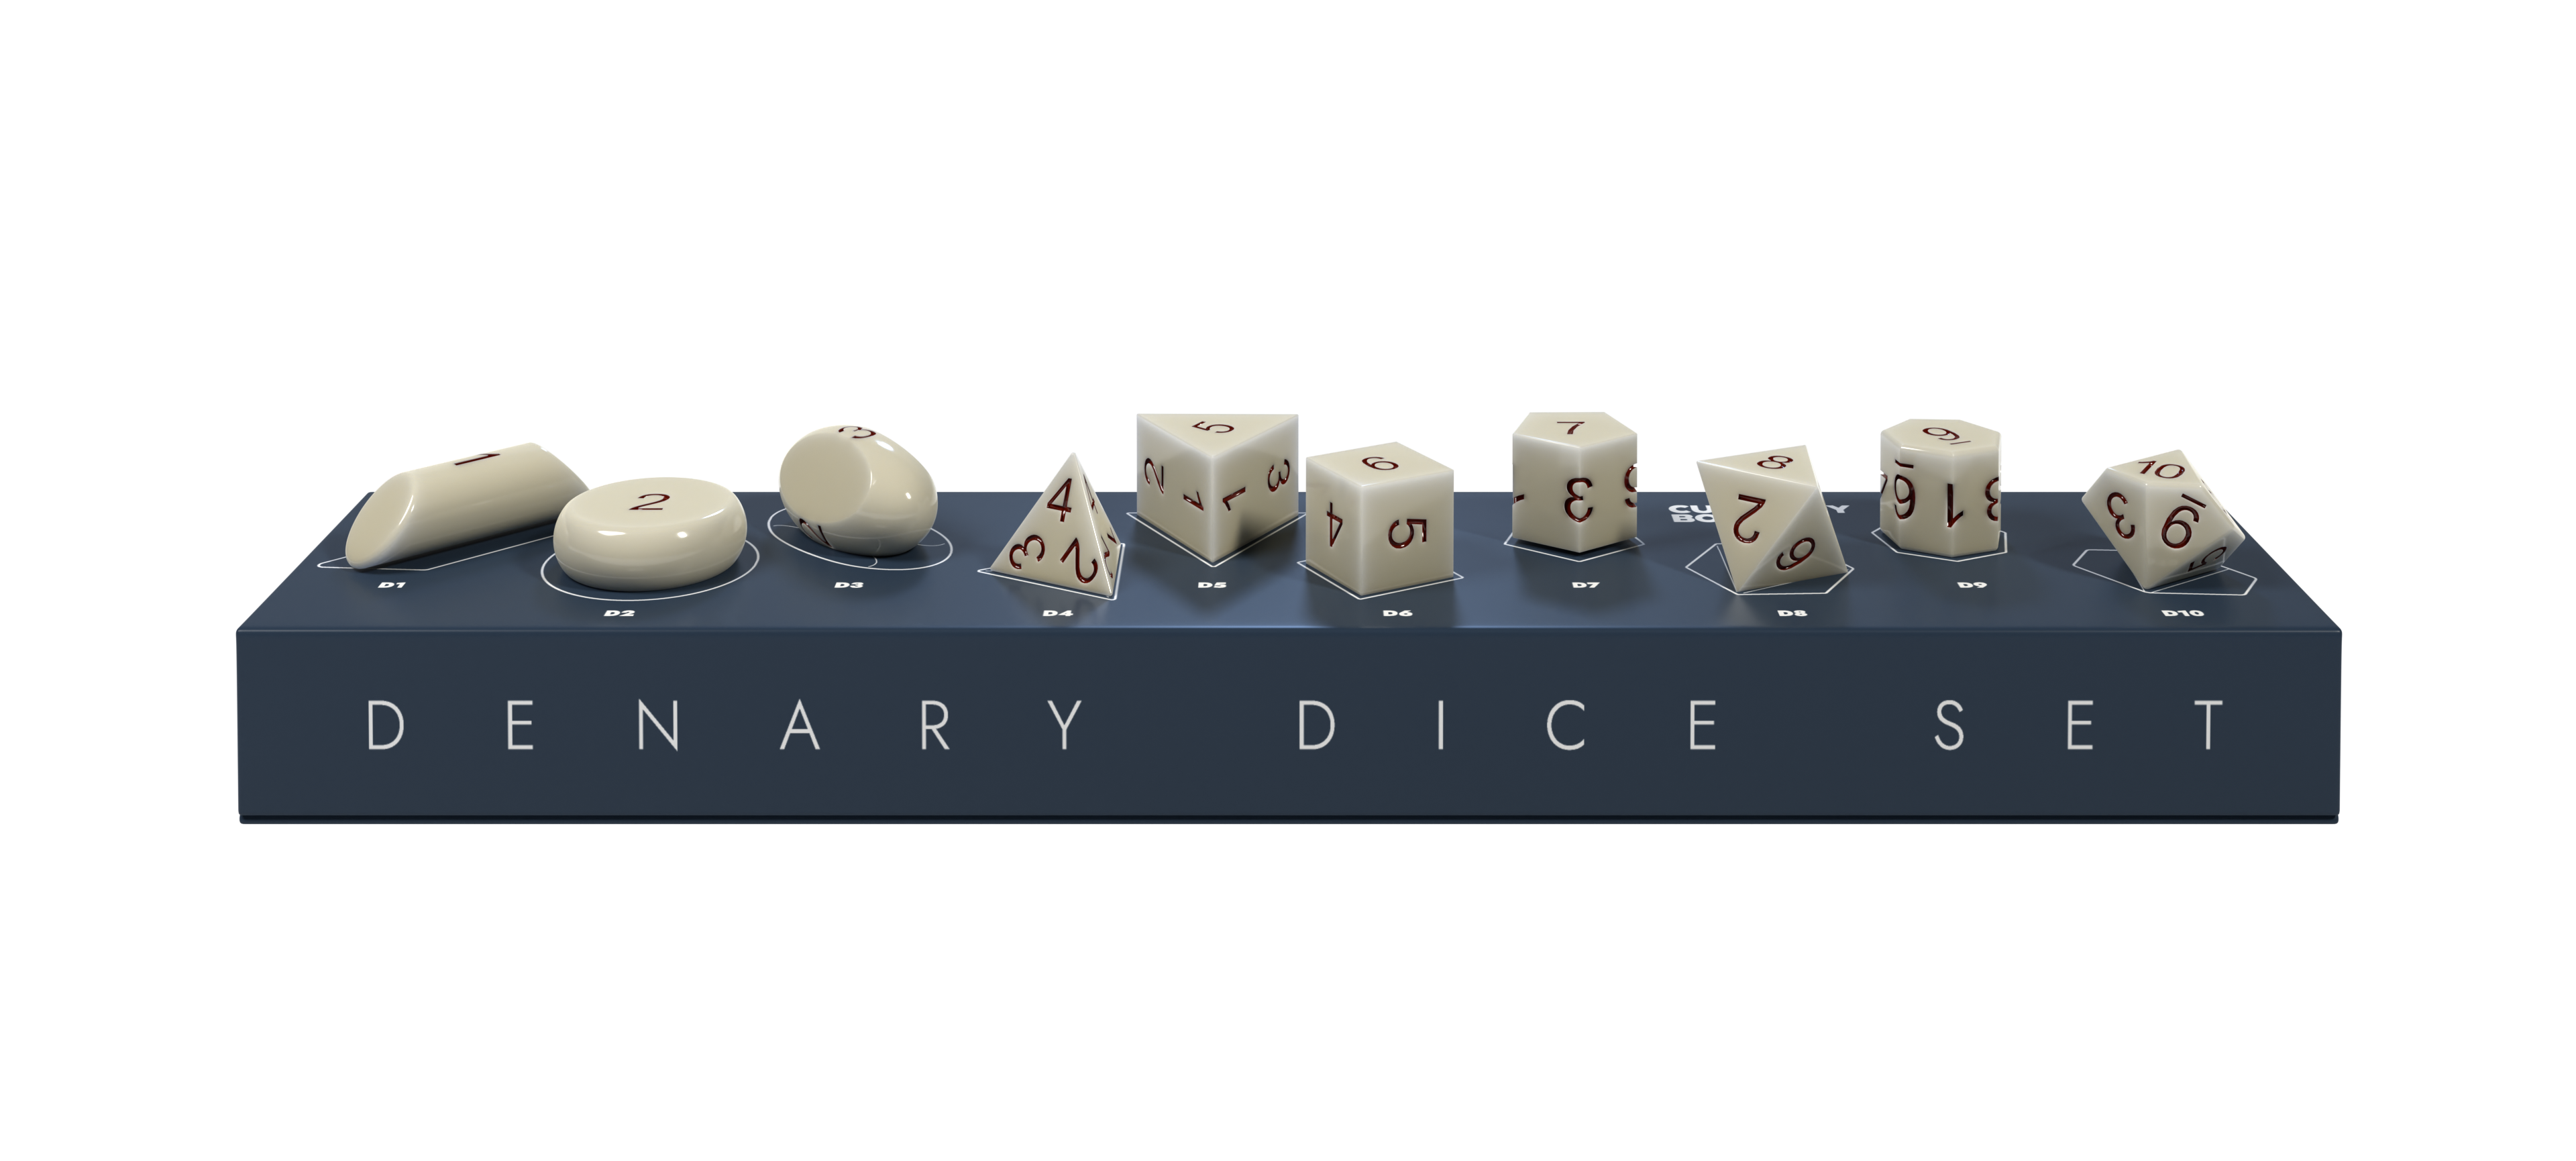 Illustration of a denary dice set